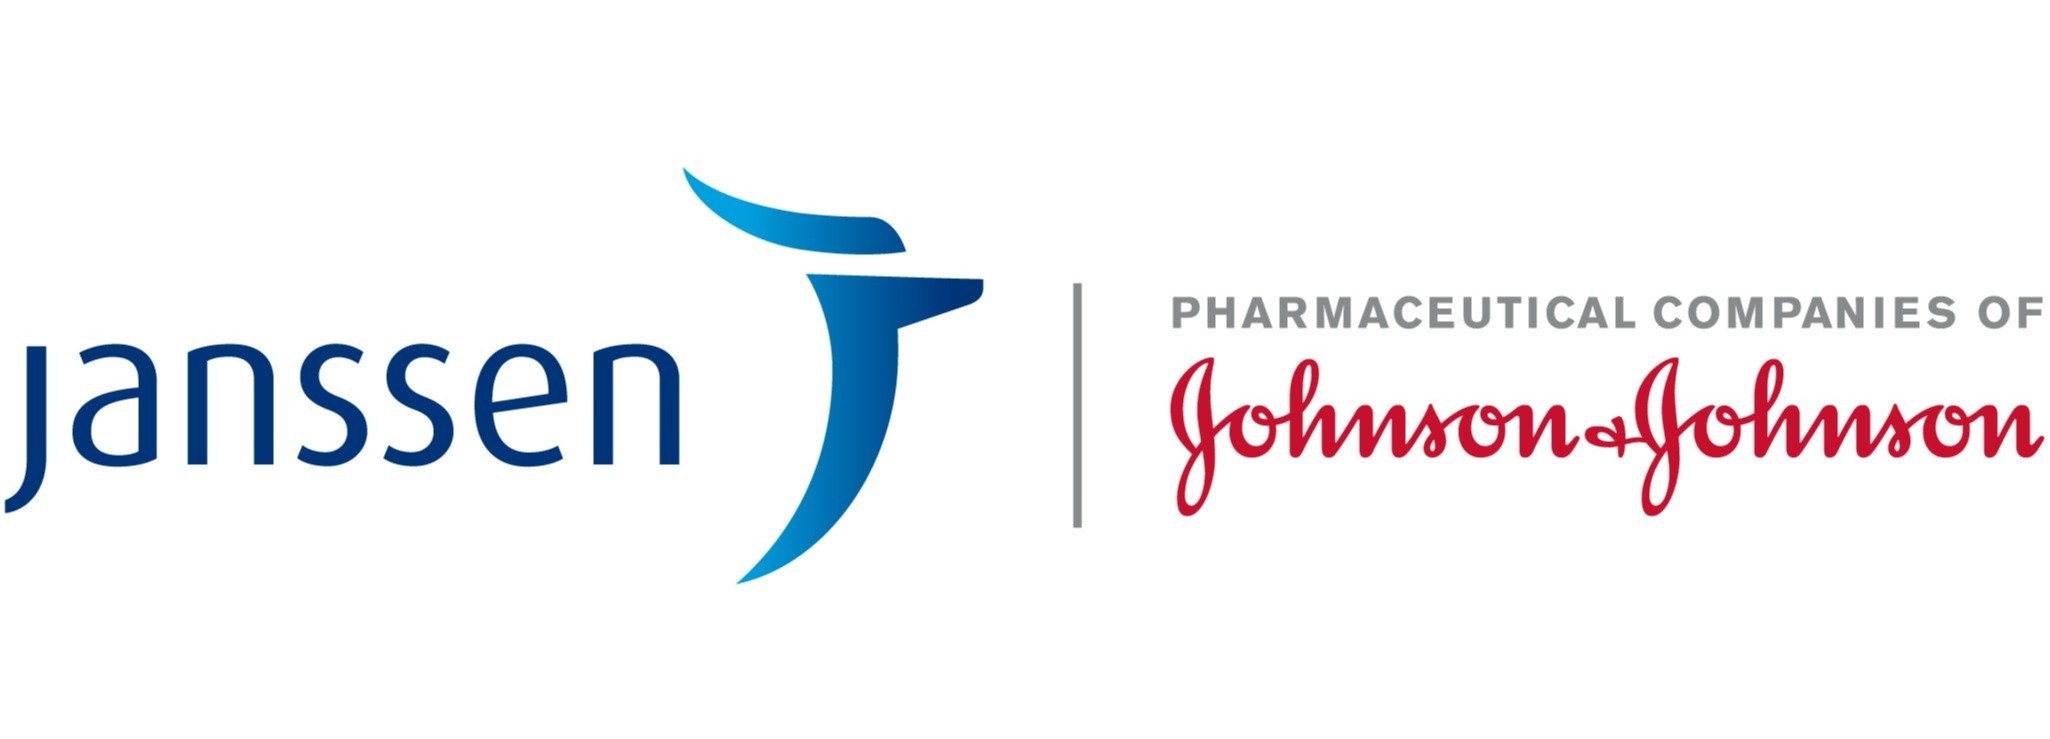 Company logo with text 'Janssen Pharmaceutical Companies of Johnson & Johnson'